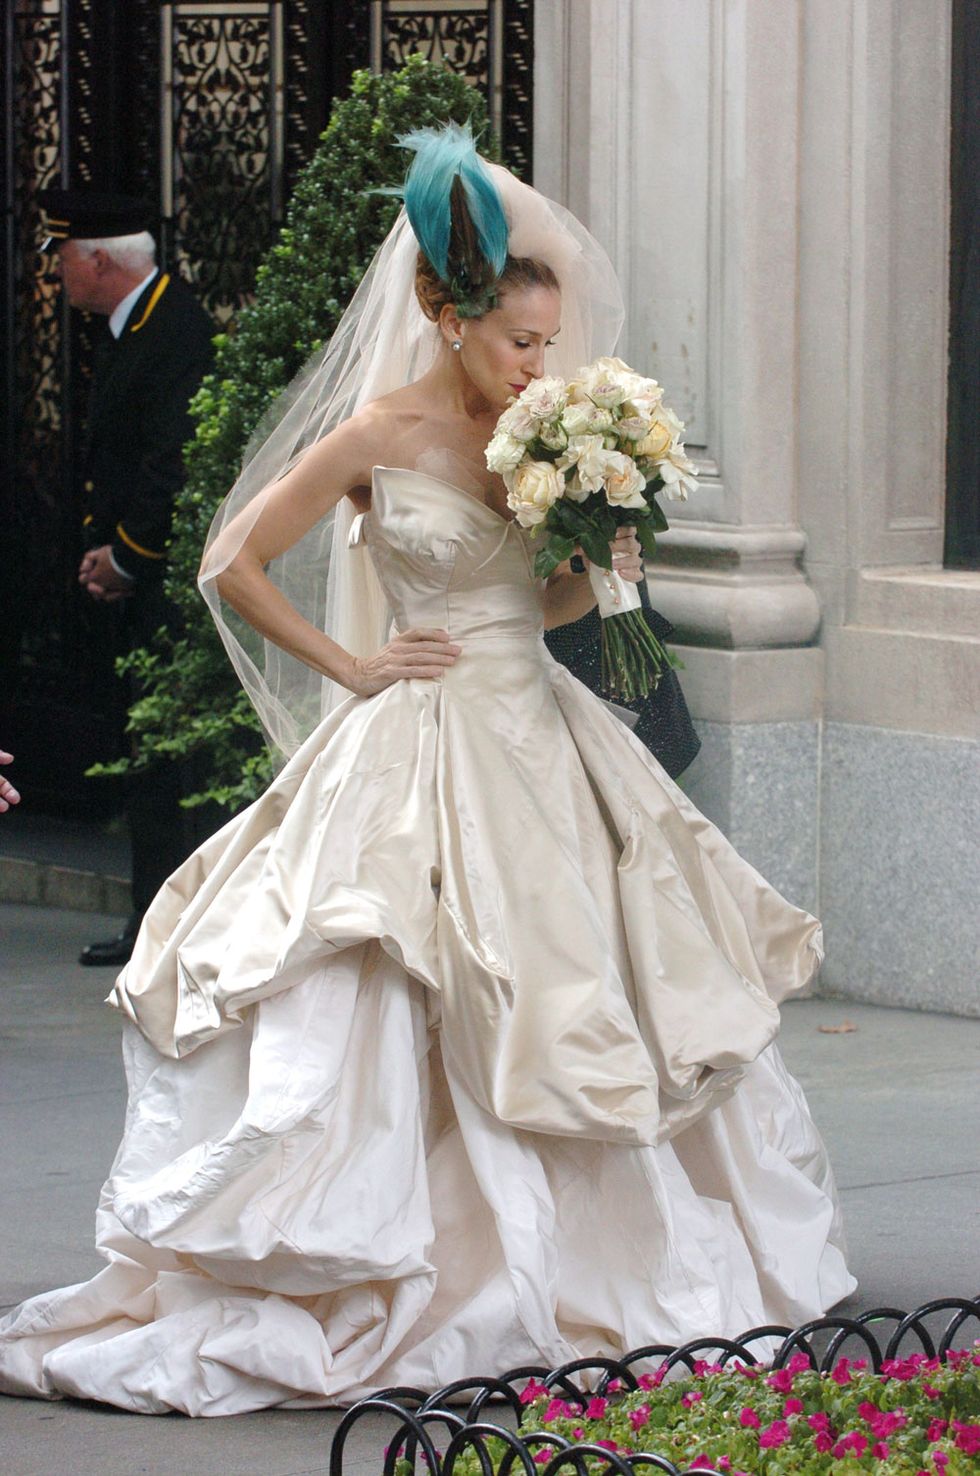 Helix wedding gown